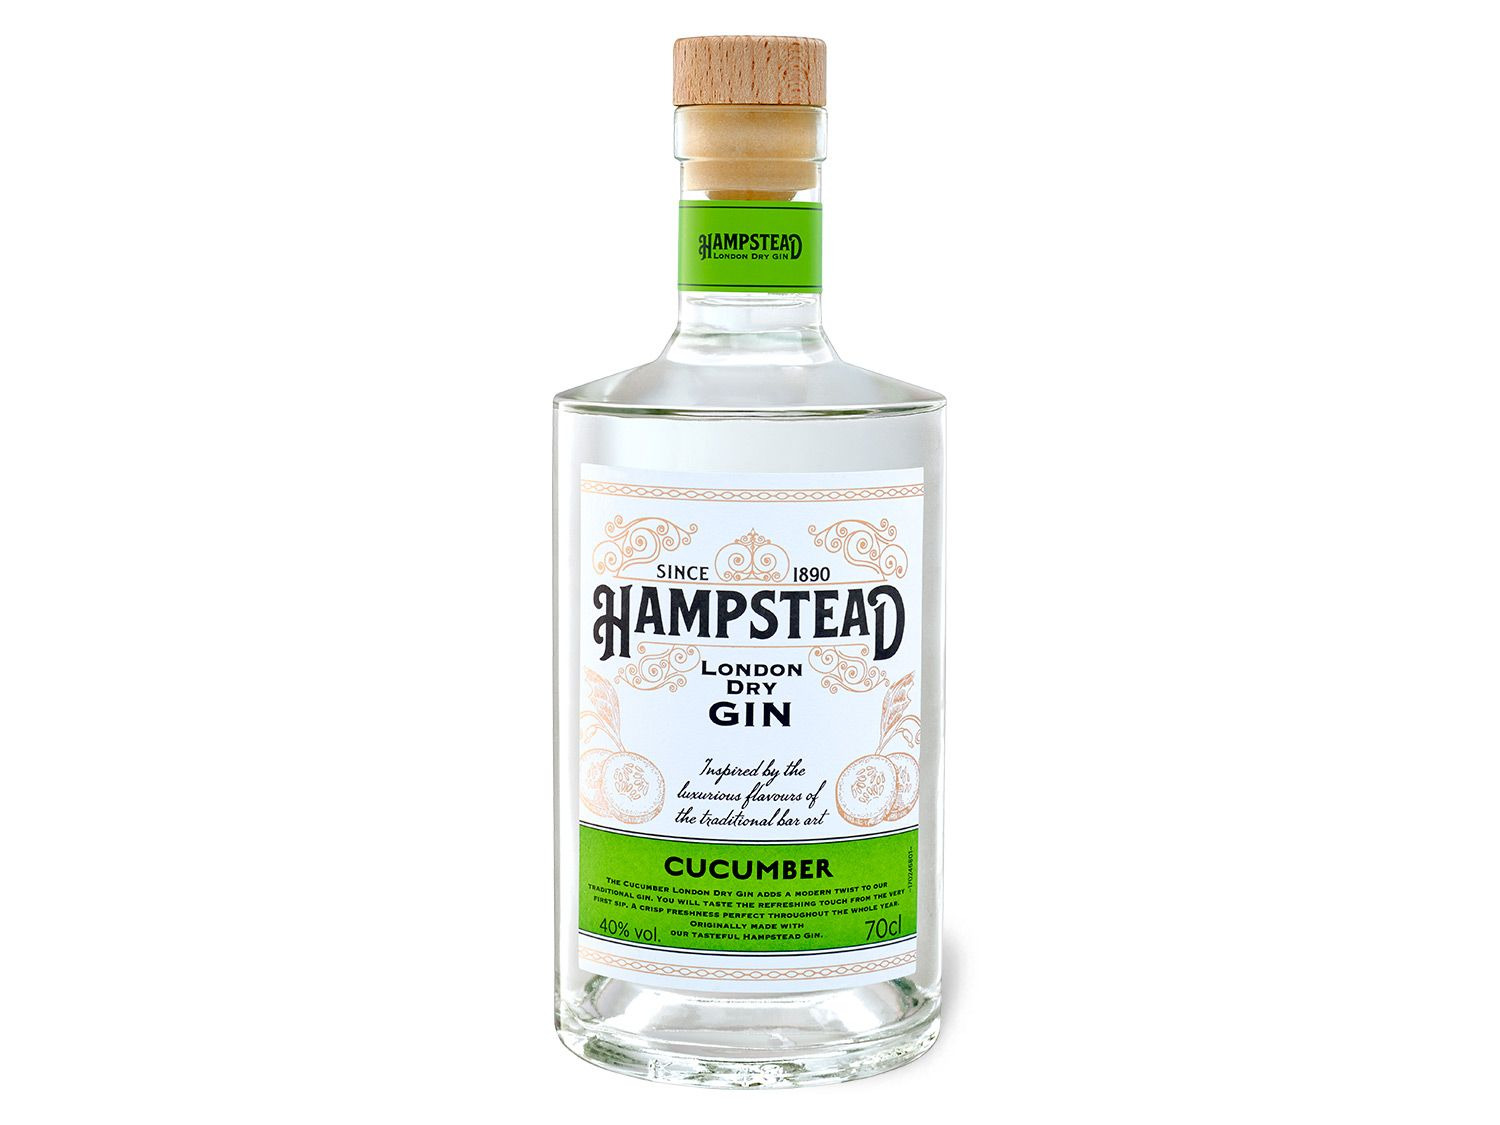 Hampstead London Dry Gin Cucumber 40% Vol | LIDL